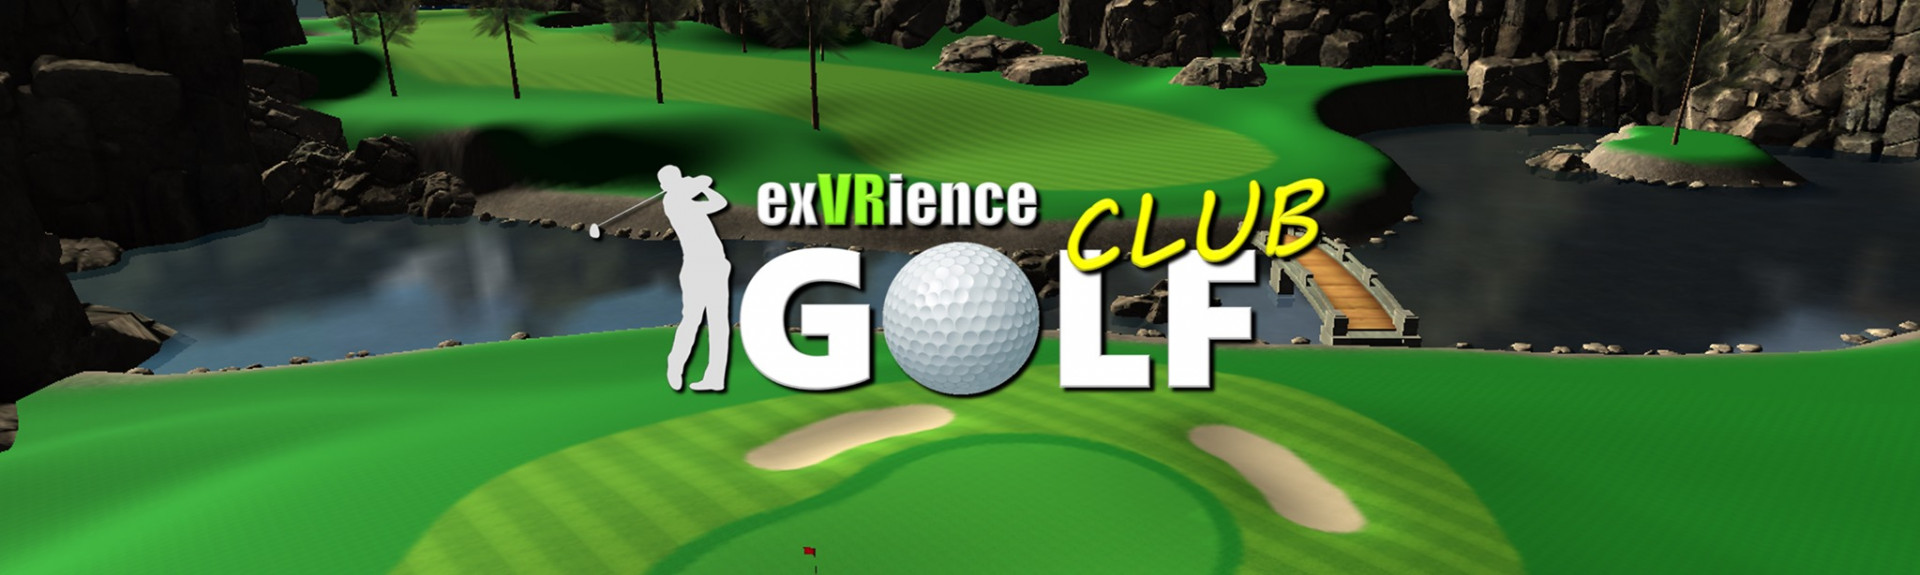 exVRience Golf Club